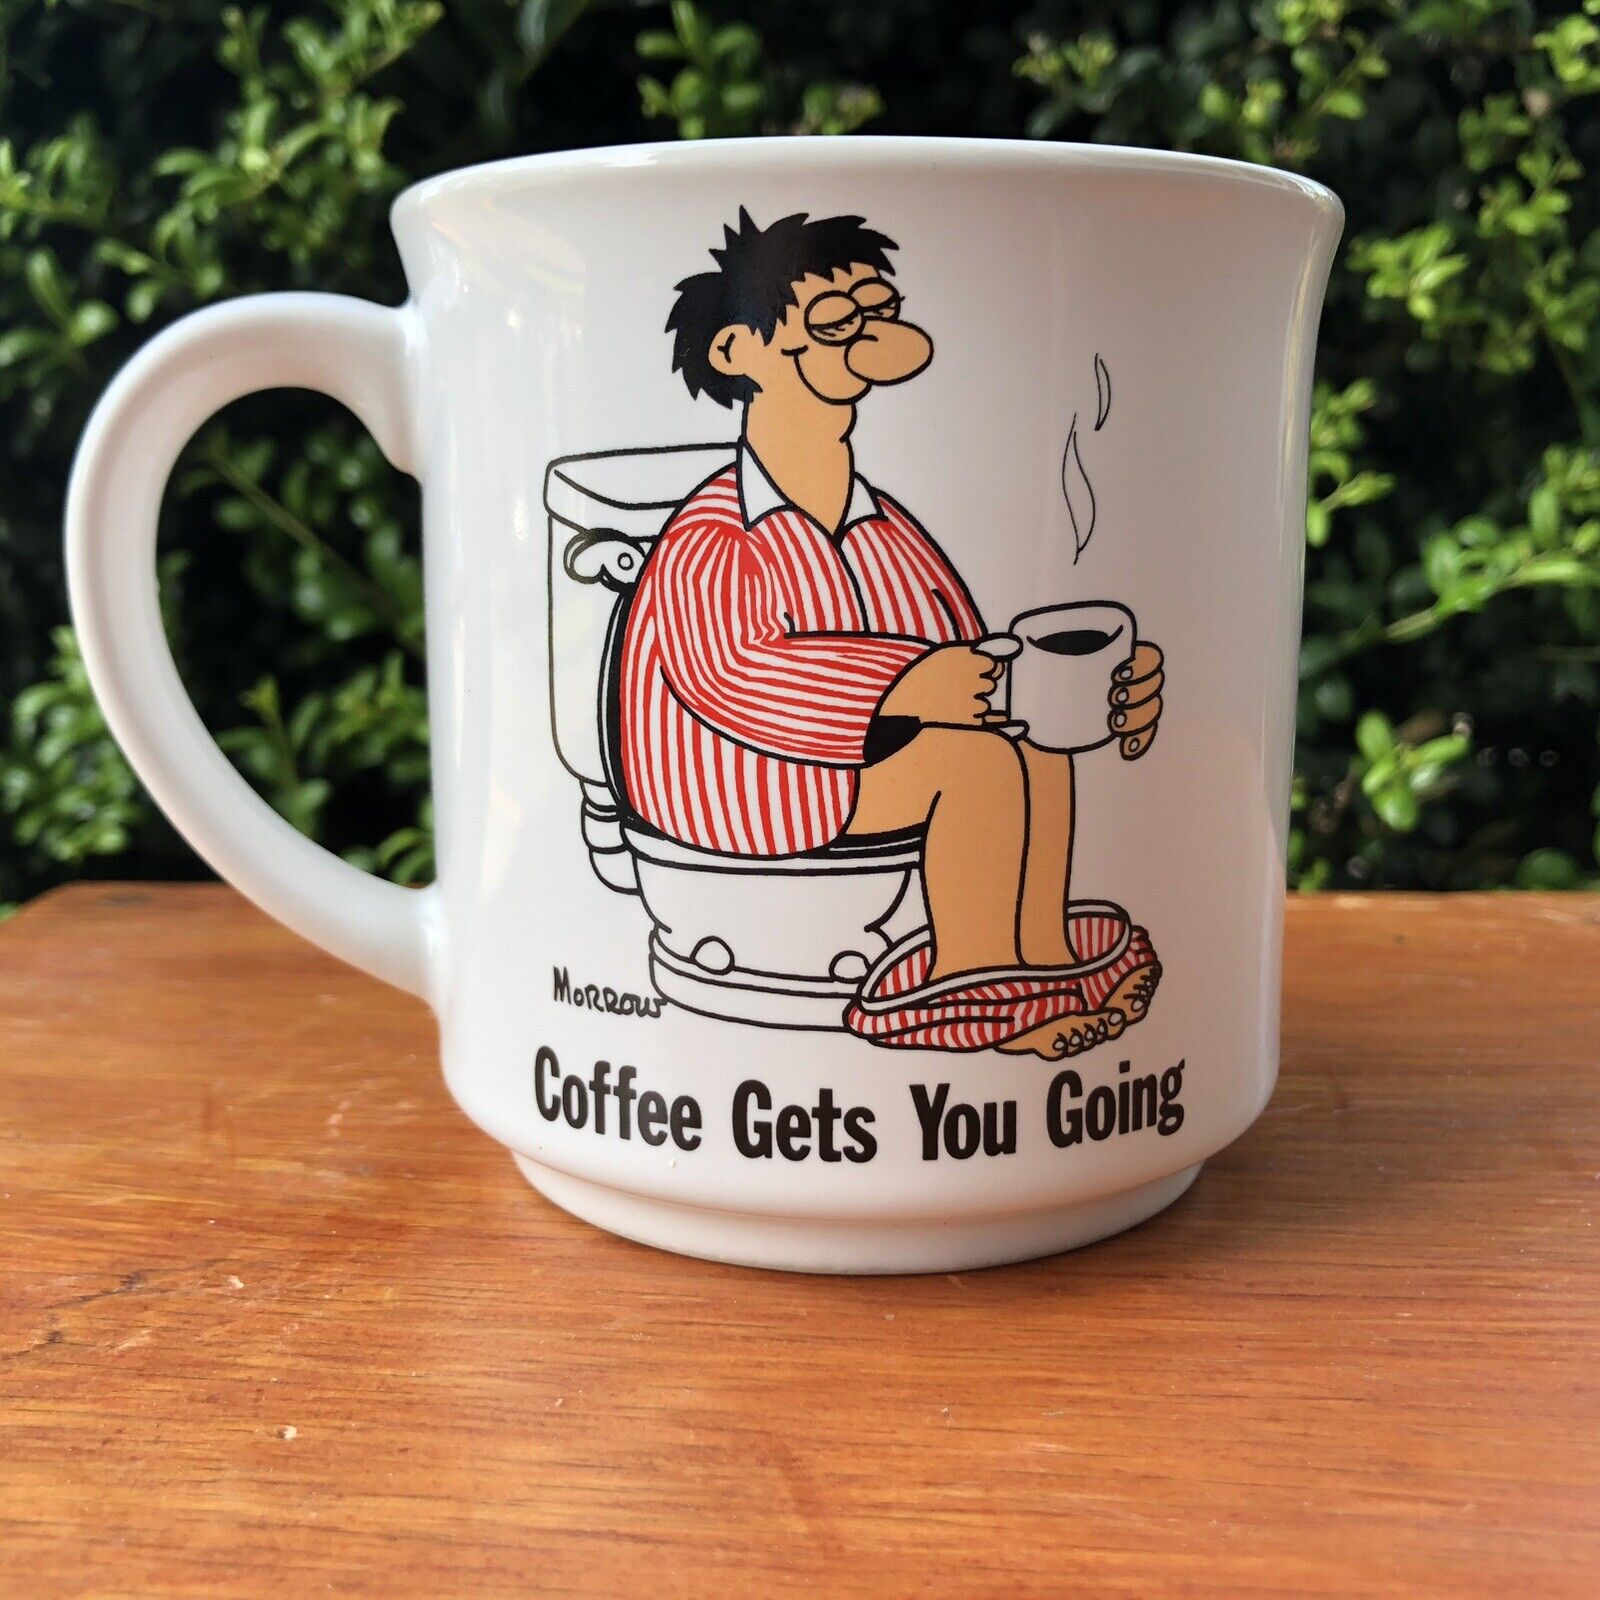 Funny Vintage Coffee Mug Ceramic Adult Humor Morrow 8 oz Coffee Gets You Going